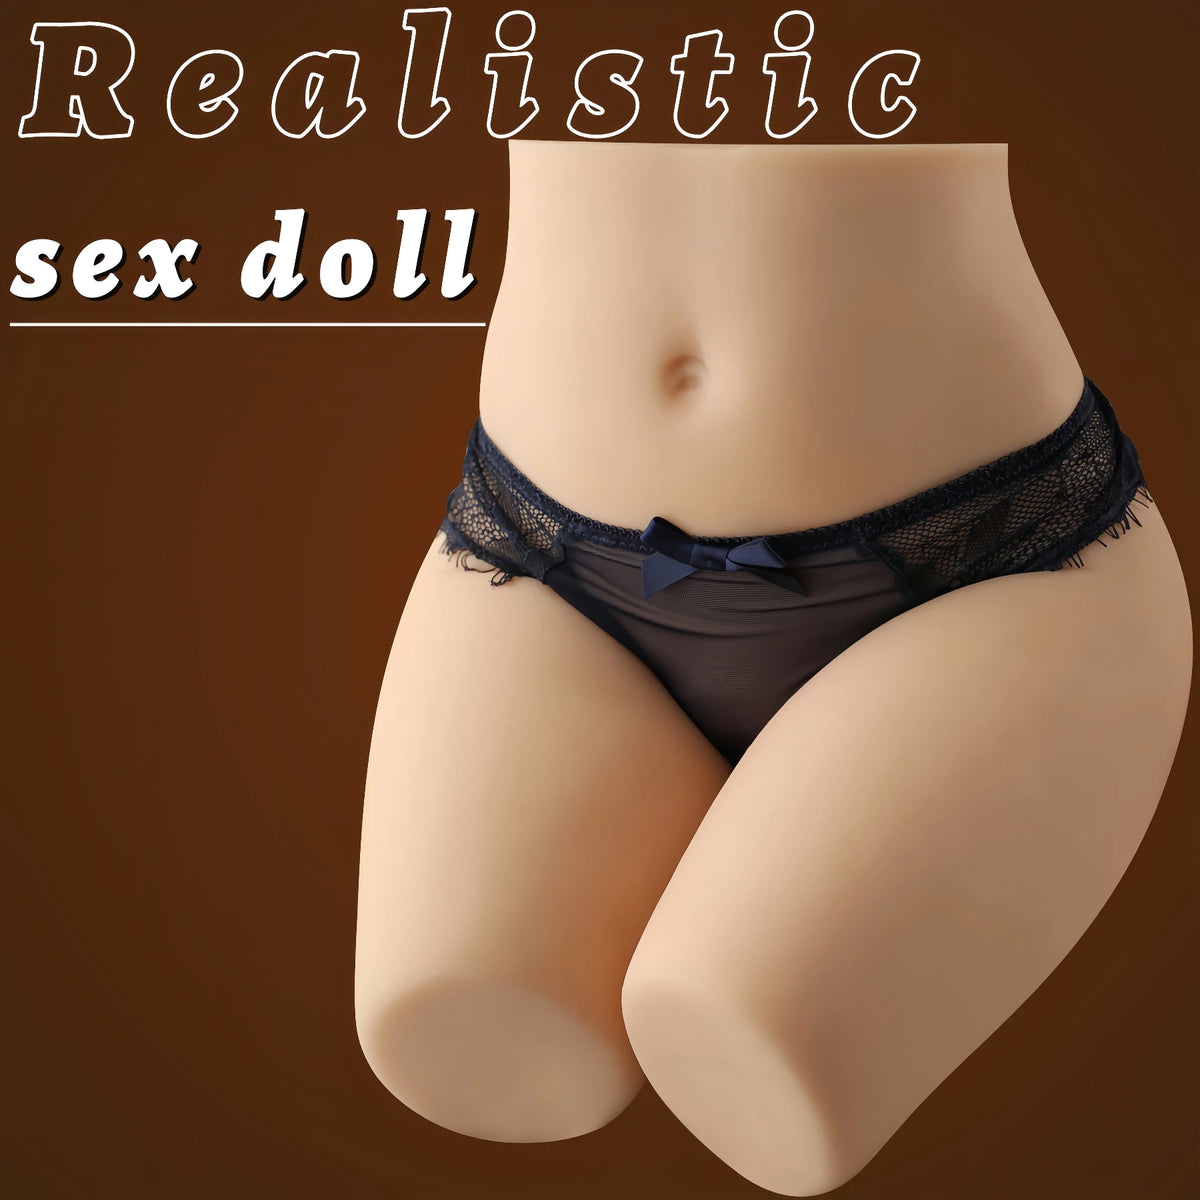 A511 (15lb/35cm)Lower body toro sex doll with sexy legs